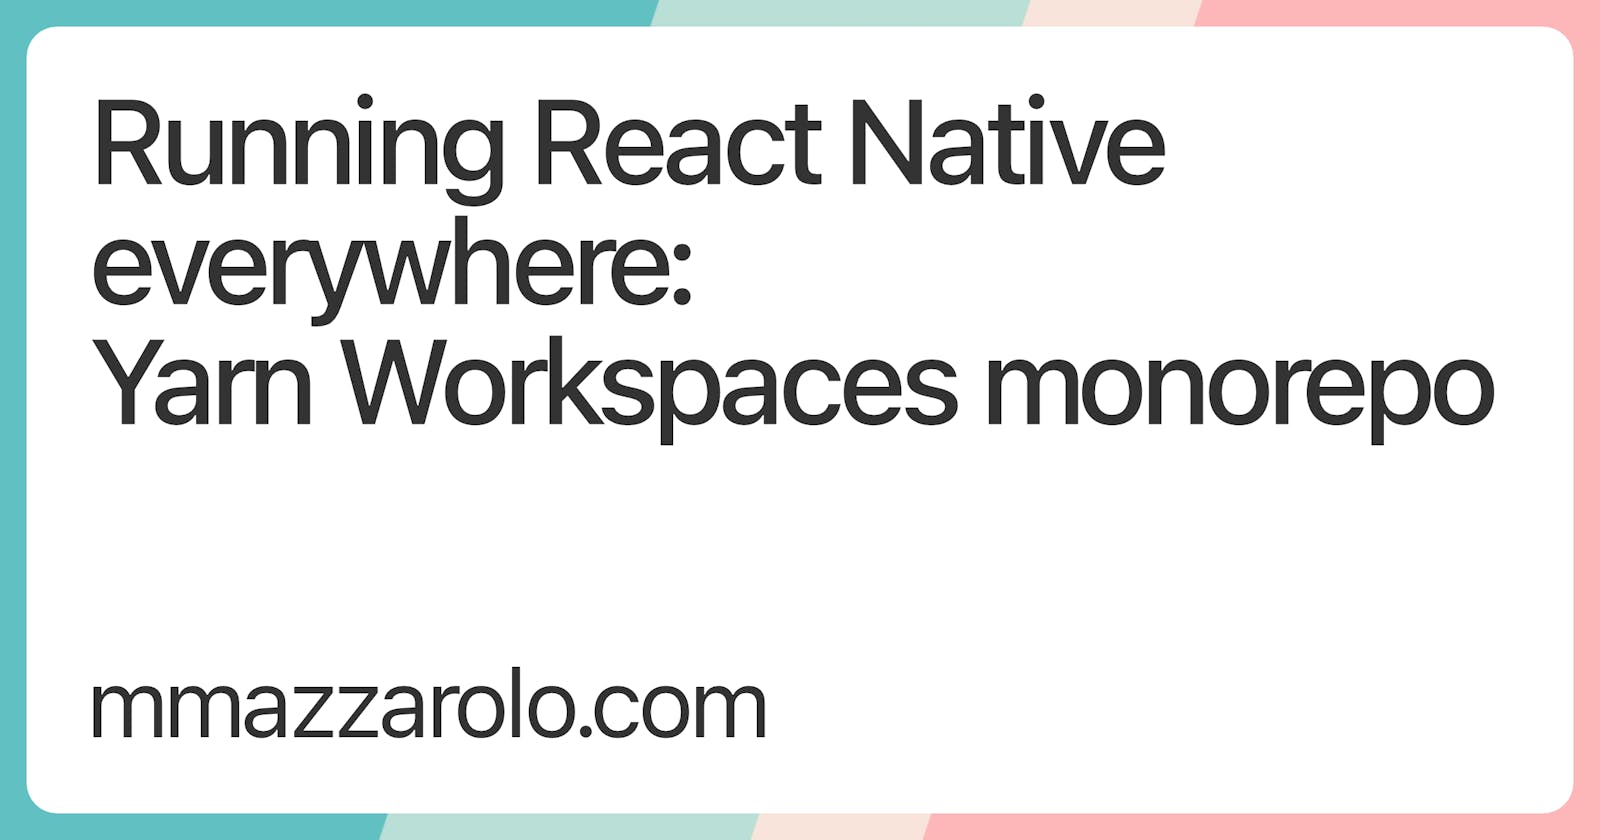 Running React Native everywhere: Yarn Workspaces monorepo